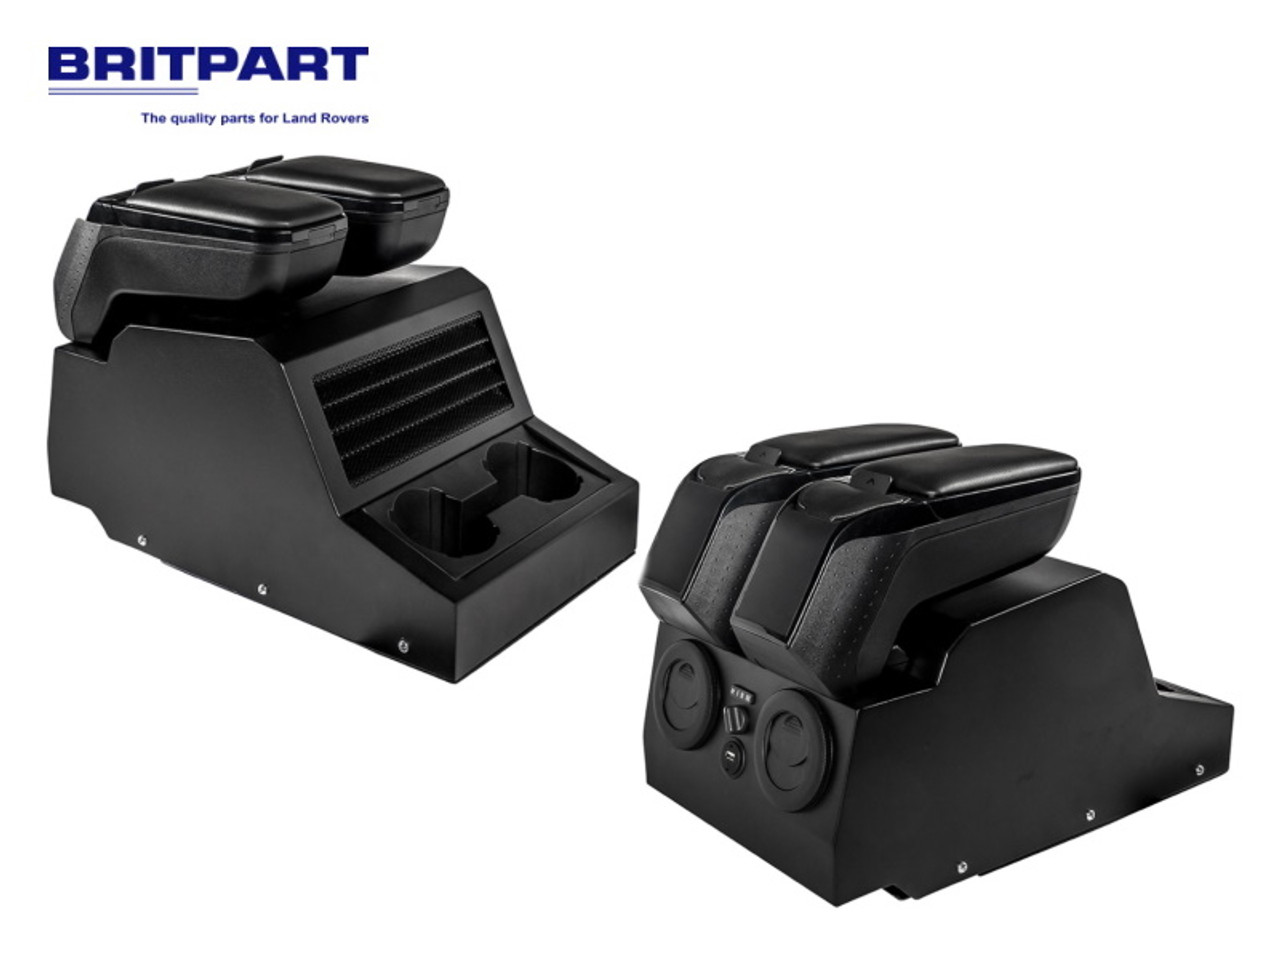 Brtipart Rear Air Con Kit For Defender Tdci Station Wagon - DA6504